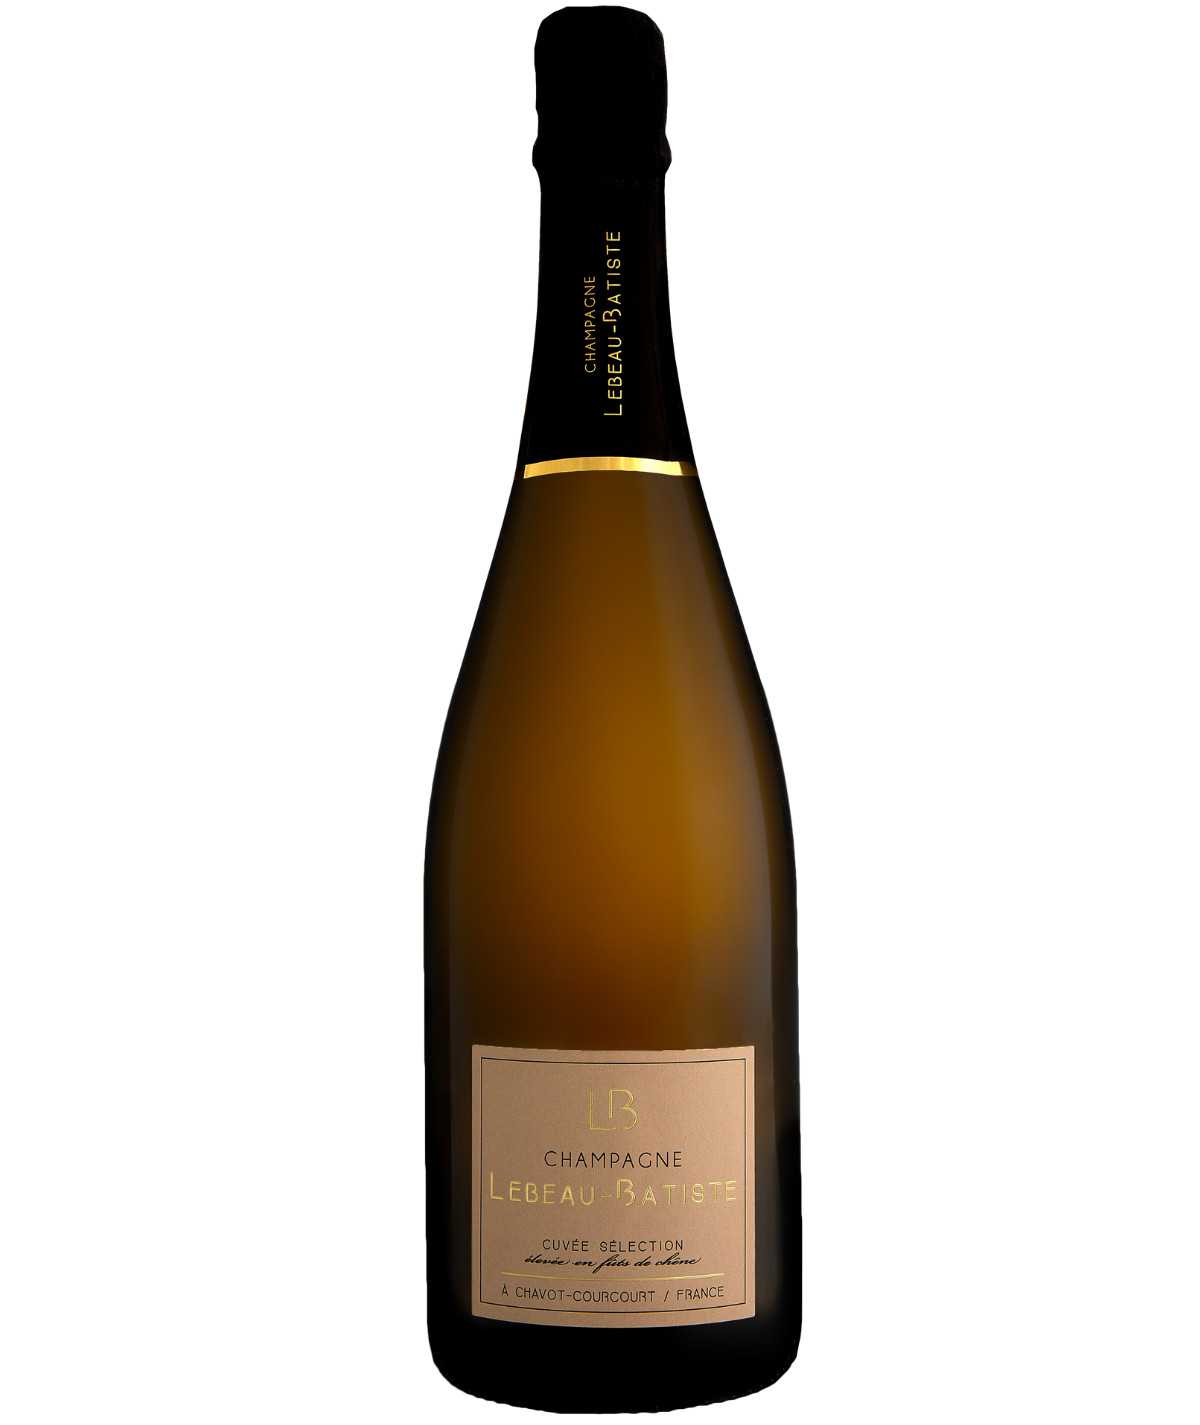 LEBEAU-BATISTE champagne Cuvée Selection